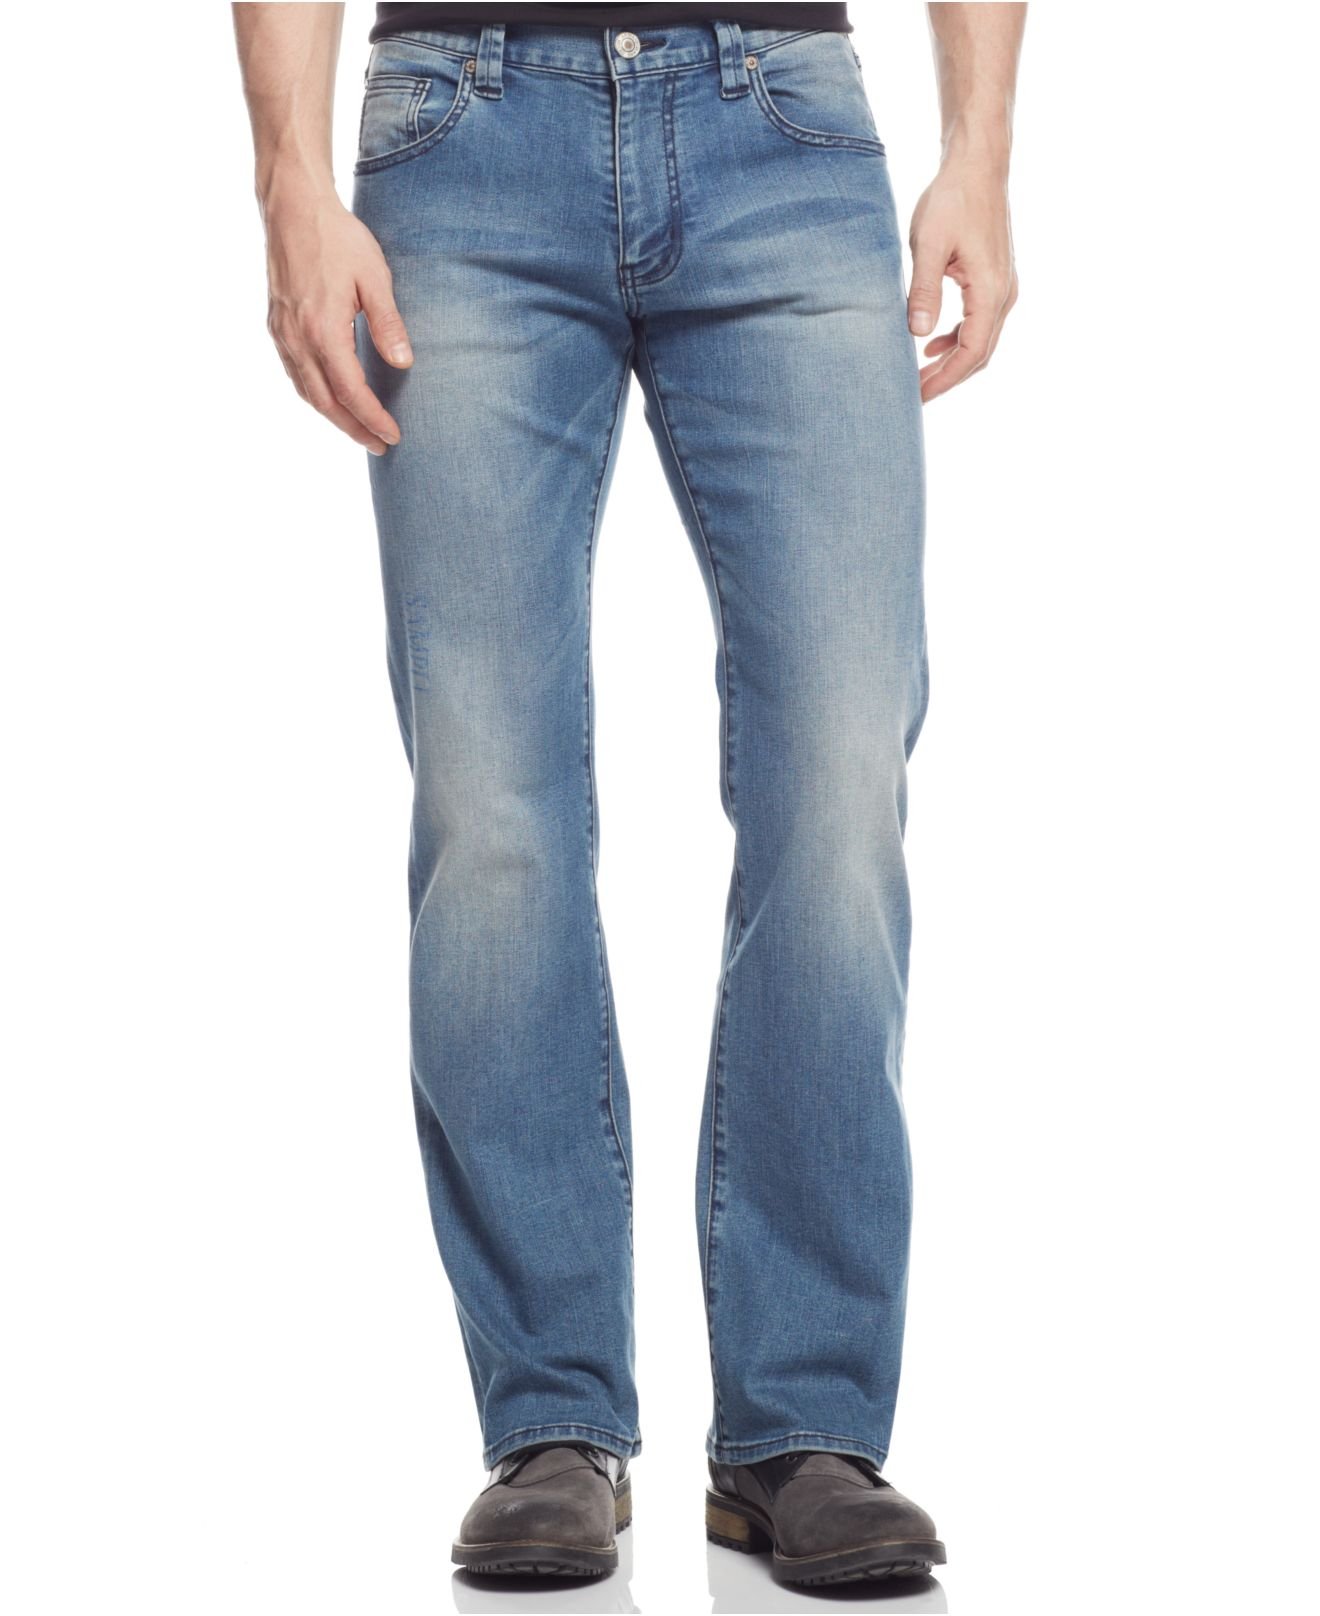 Armani Jeans J05 Bootcut Jeans in Denim Blue (Blue) for Men - Lyst